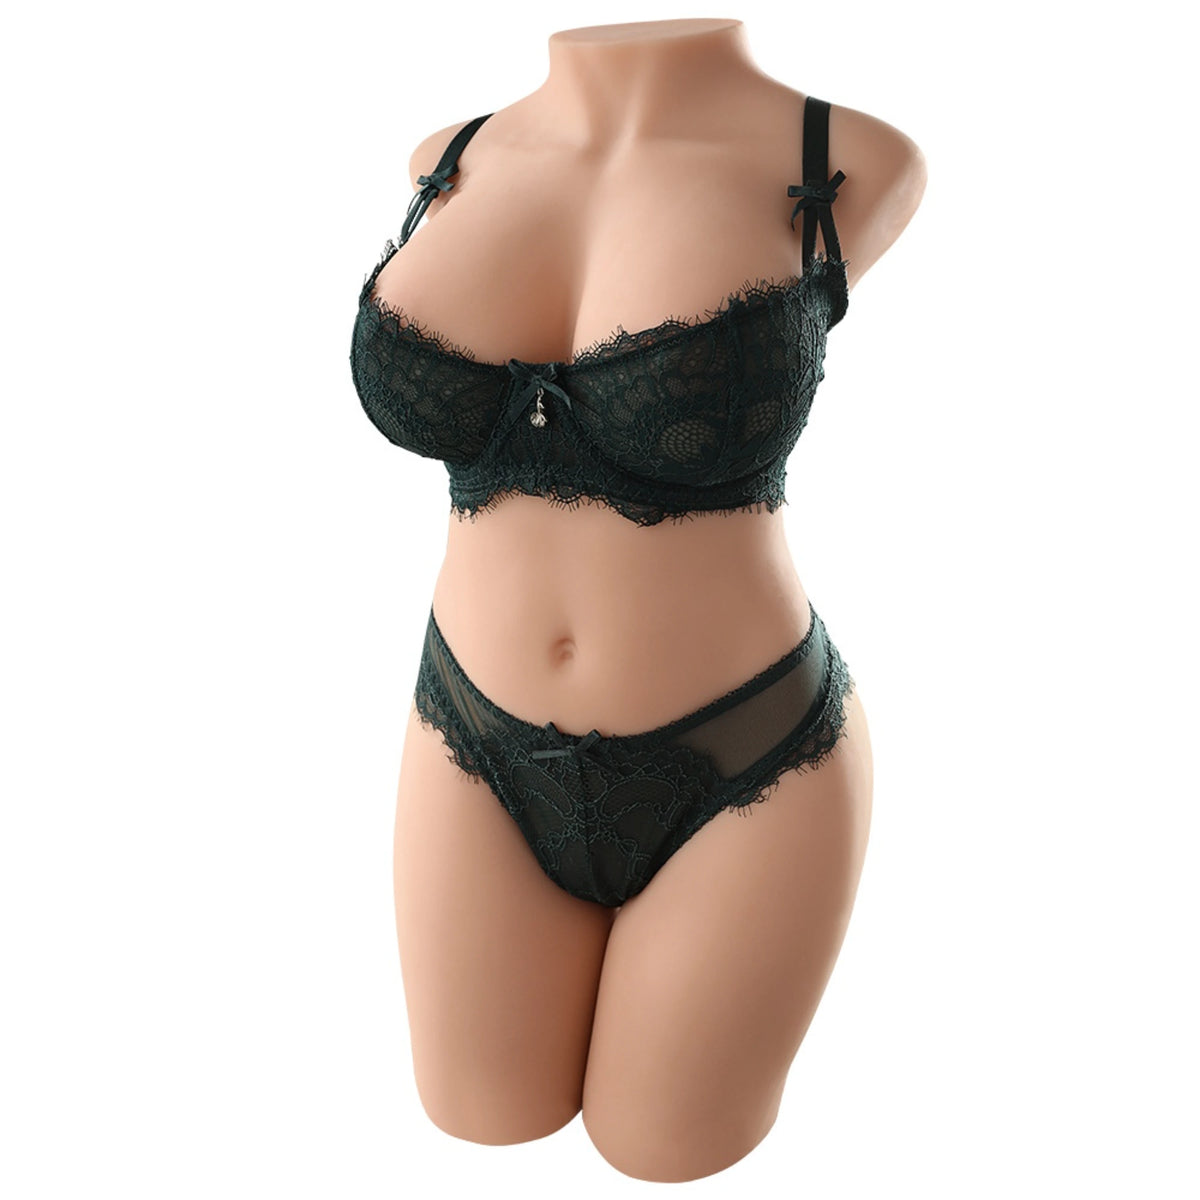 T519(20.32lb) Curvy Lightweight 55cm Sex Doll Torso&Plump Breasts&Large round nipples